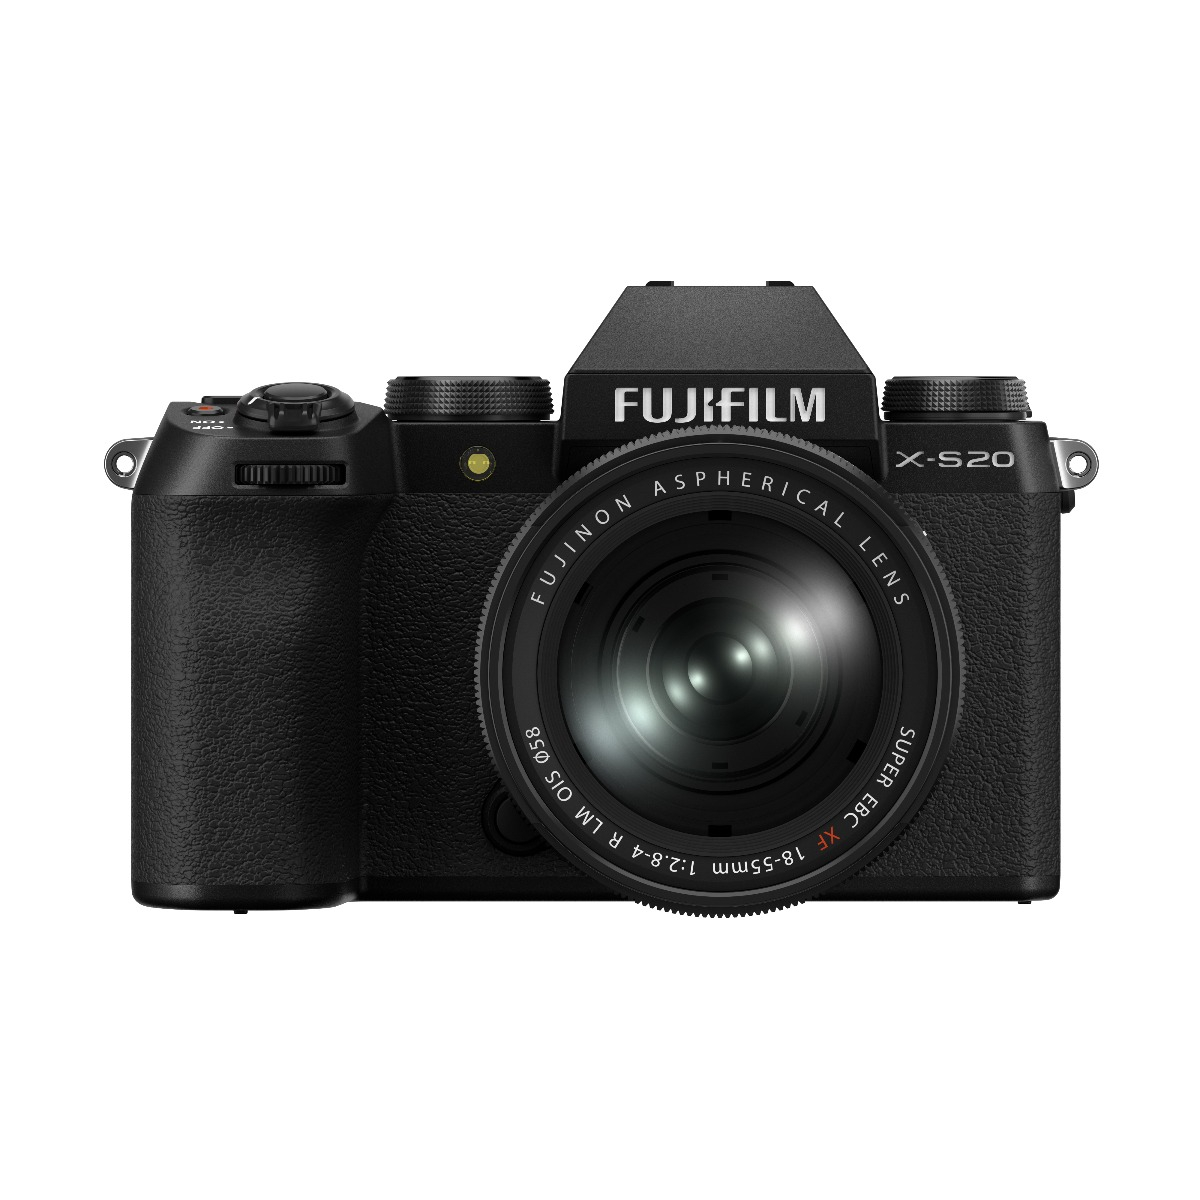 FUJIFILM X-S20 with XF 18-55mm F2.8-4 R LM OIS Lens Kit